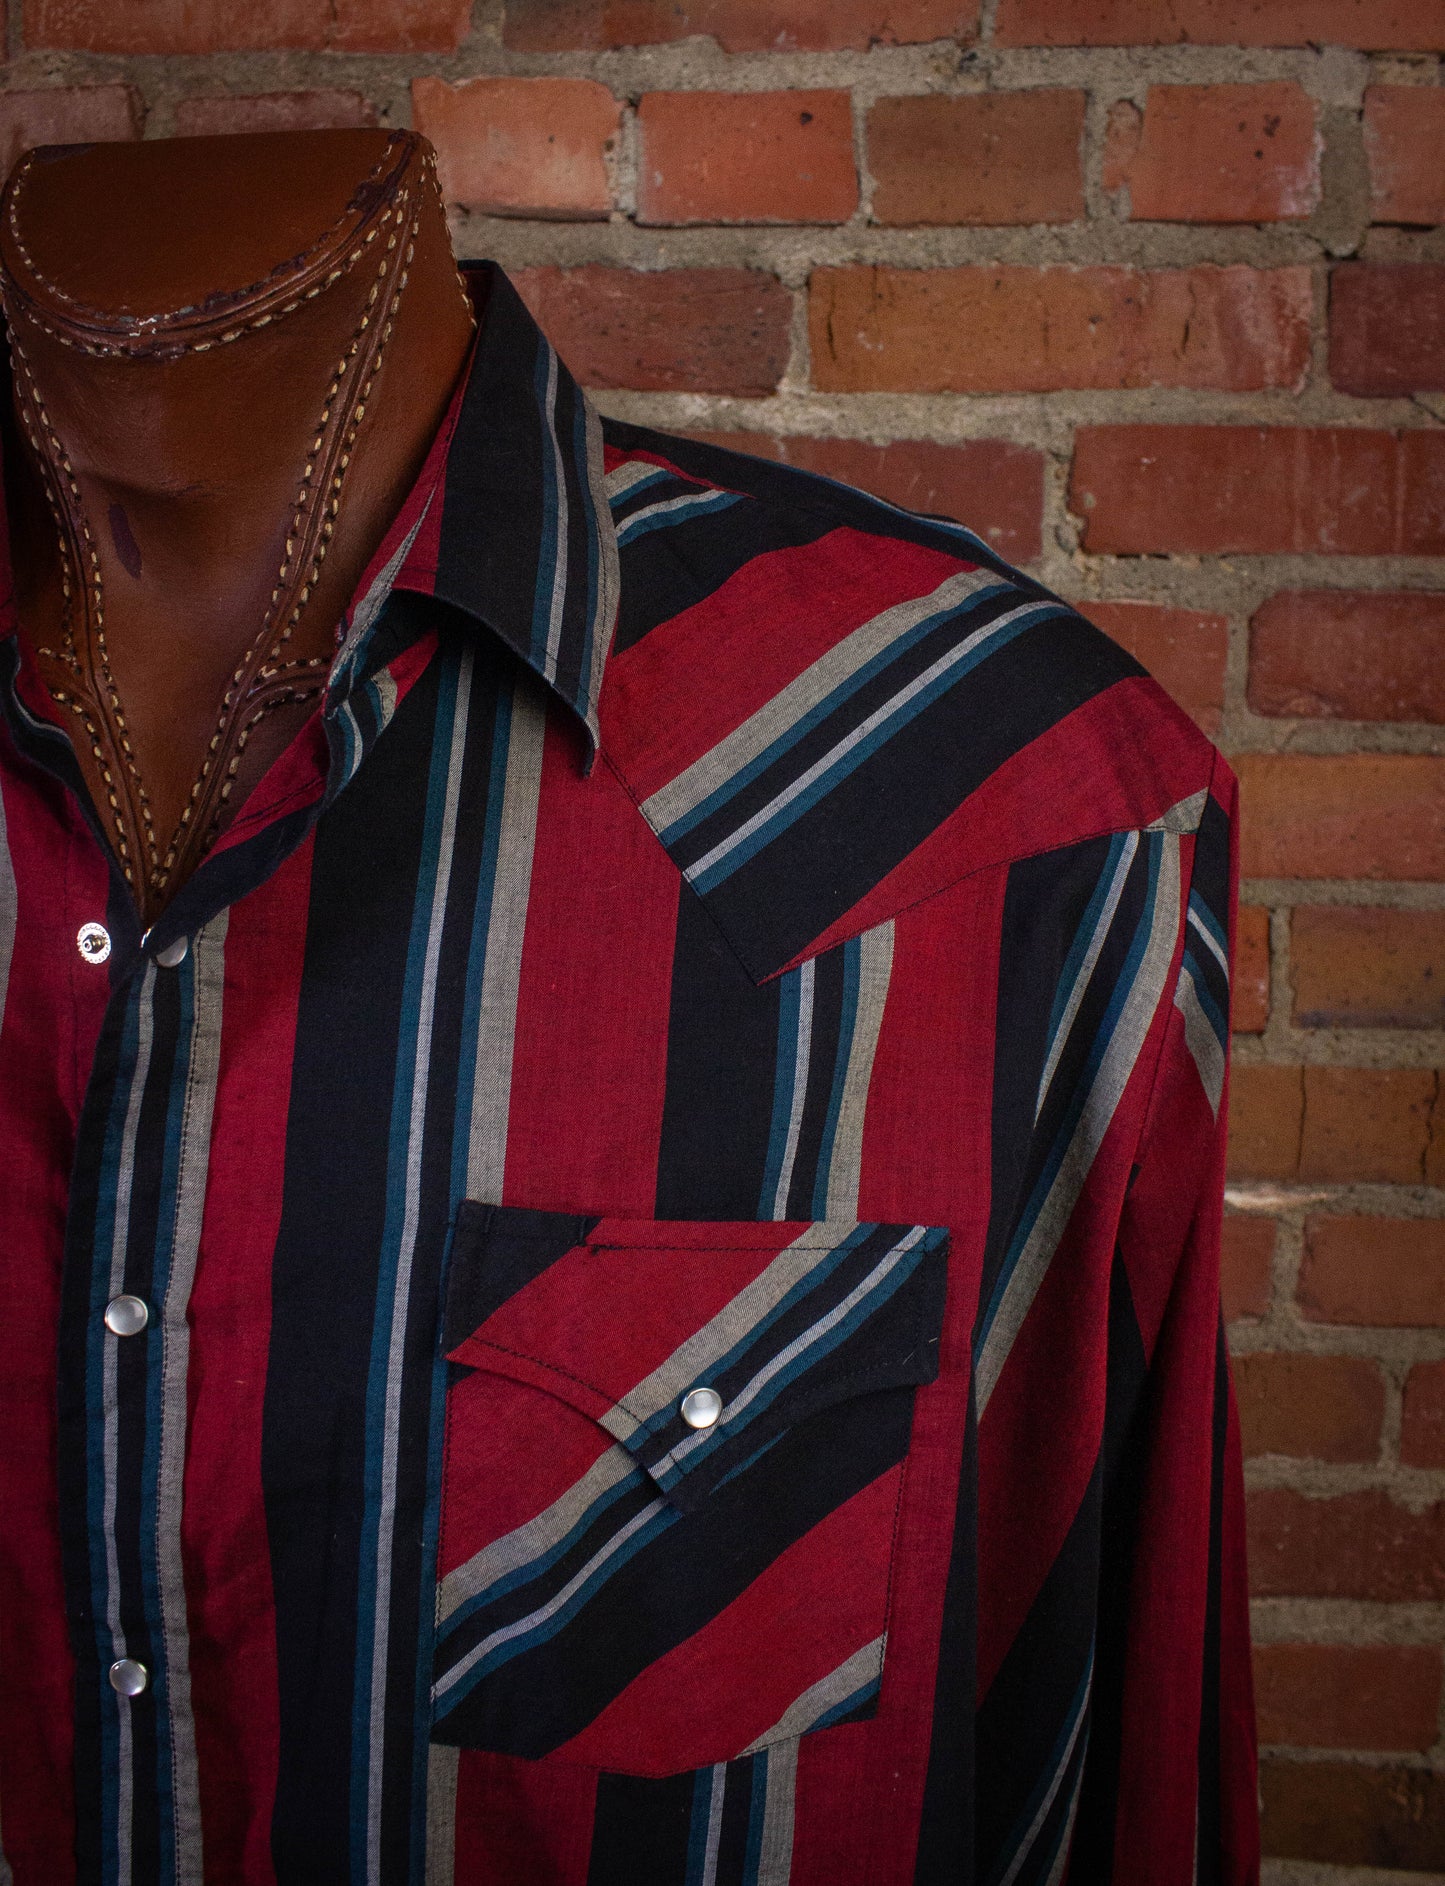 Vintage Ely Plains Striped Pearl Snap Western Shirt 2XL